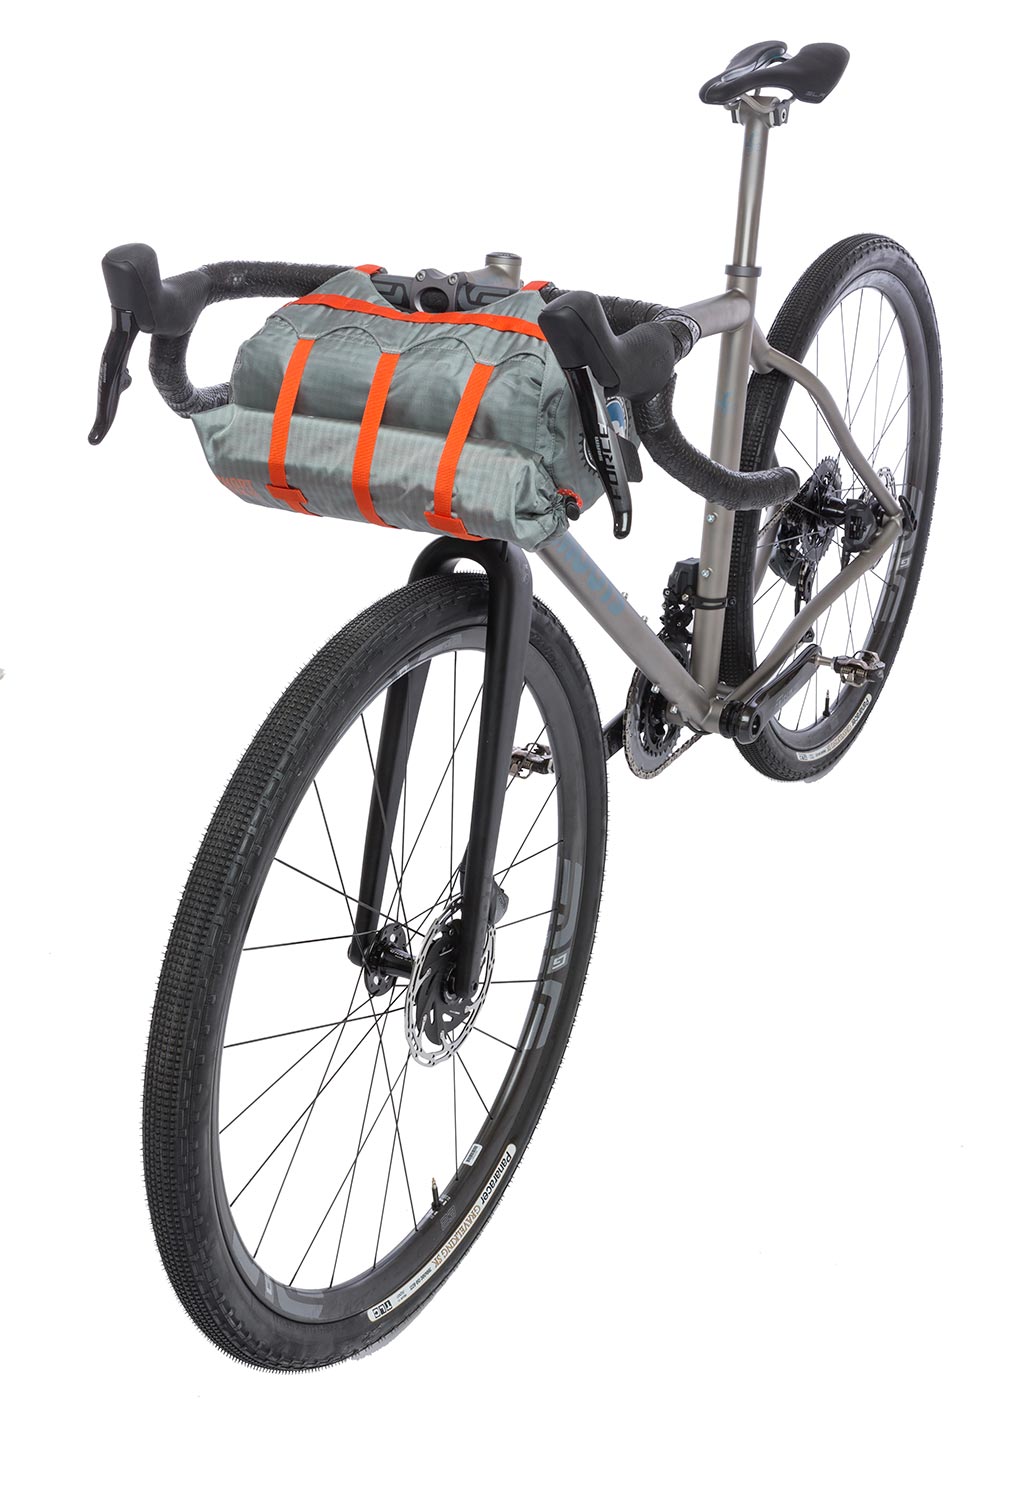 Big Agnes Copper Spur HV UL2 Bikepack Tent - Gray